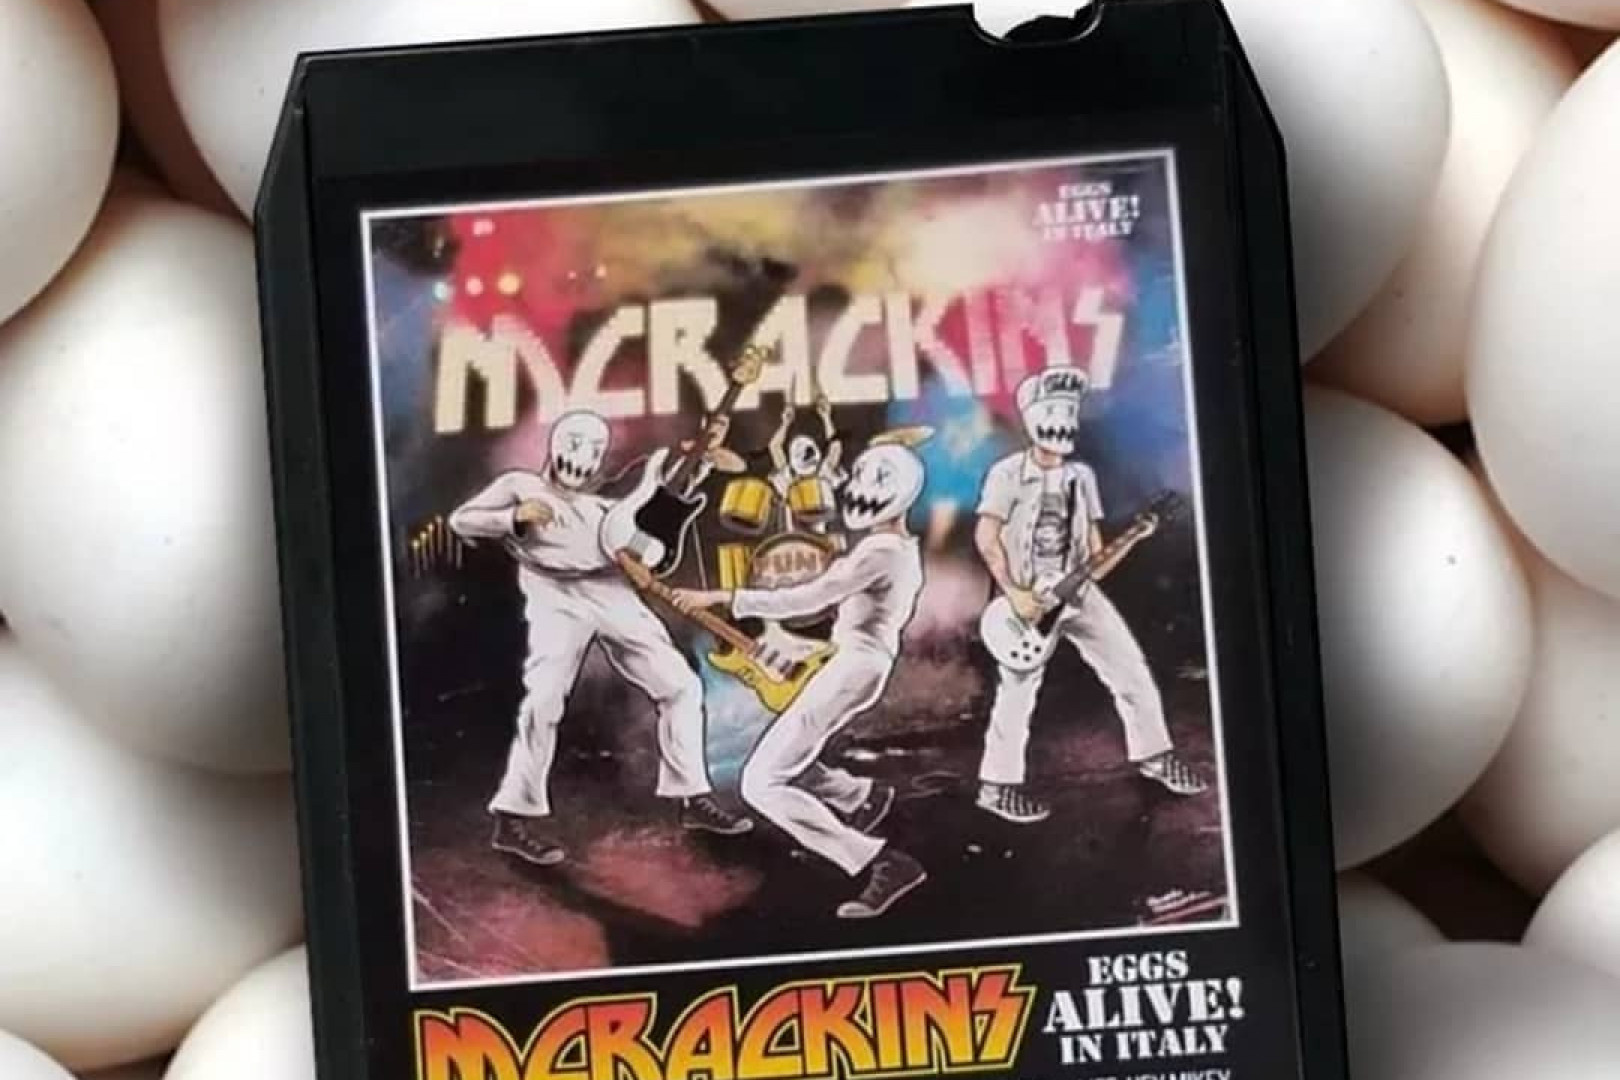 McRackins to release live album